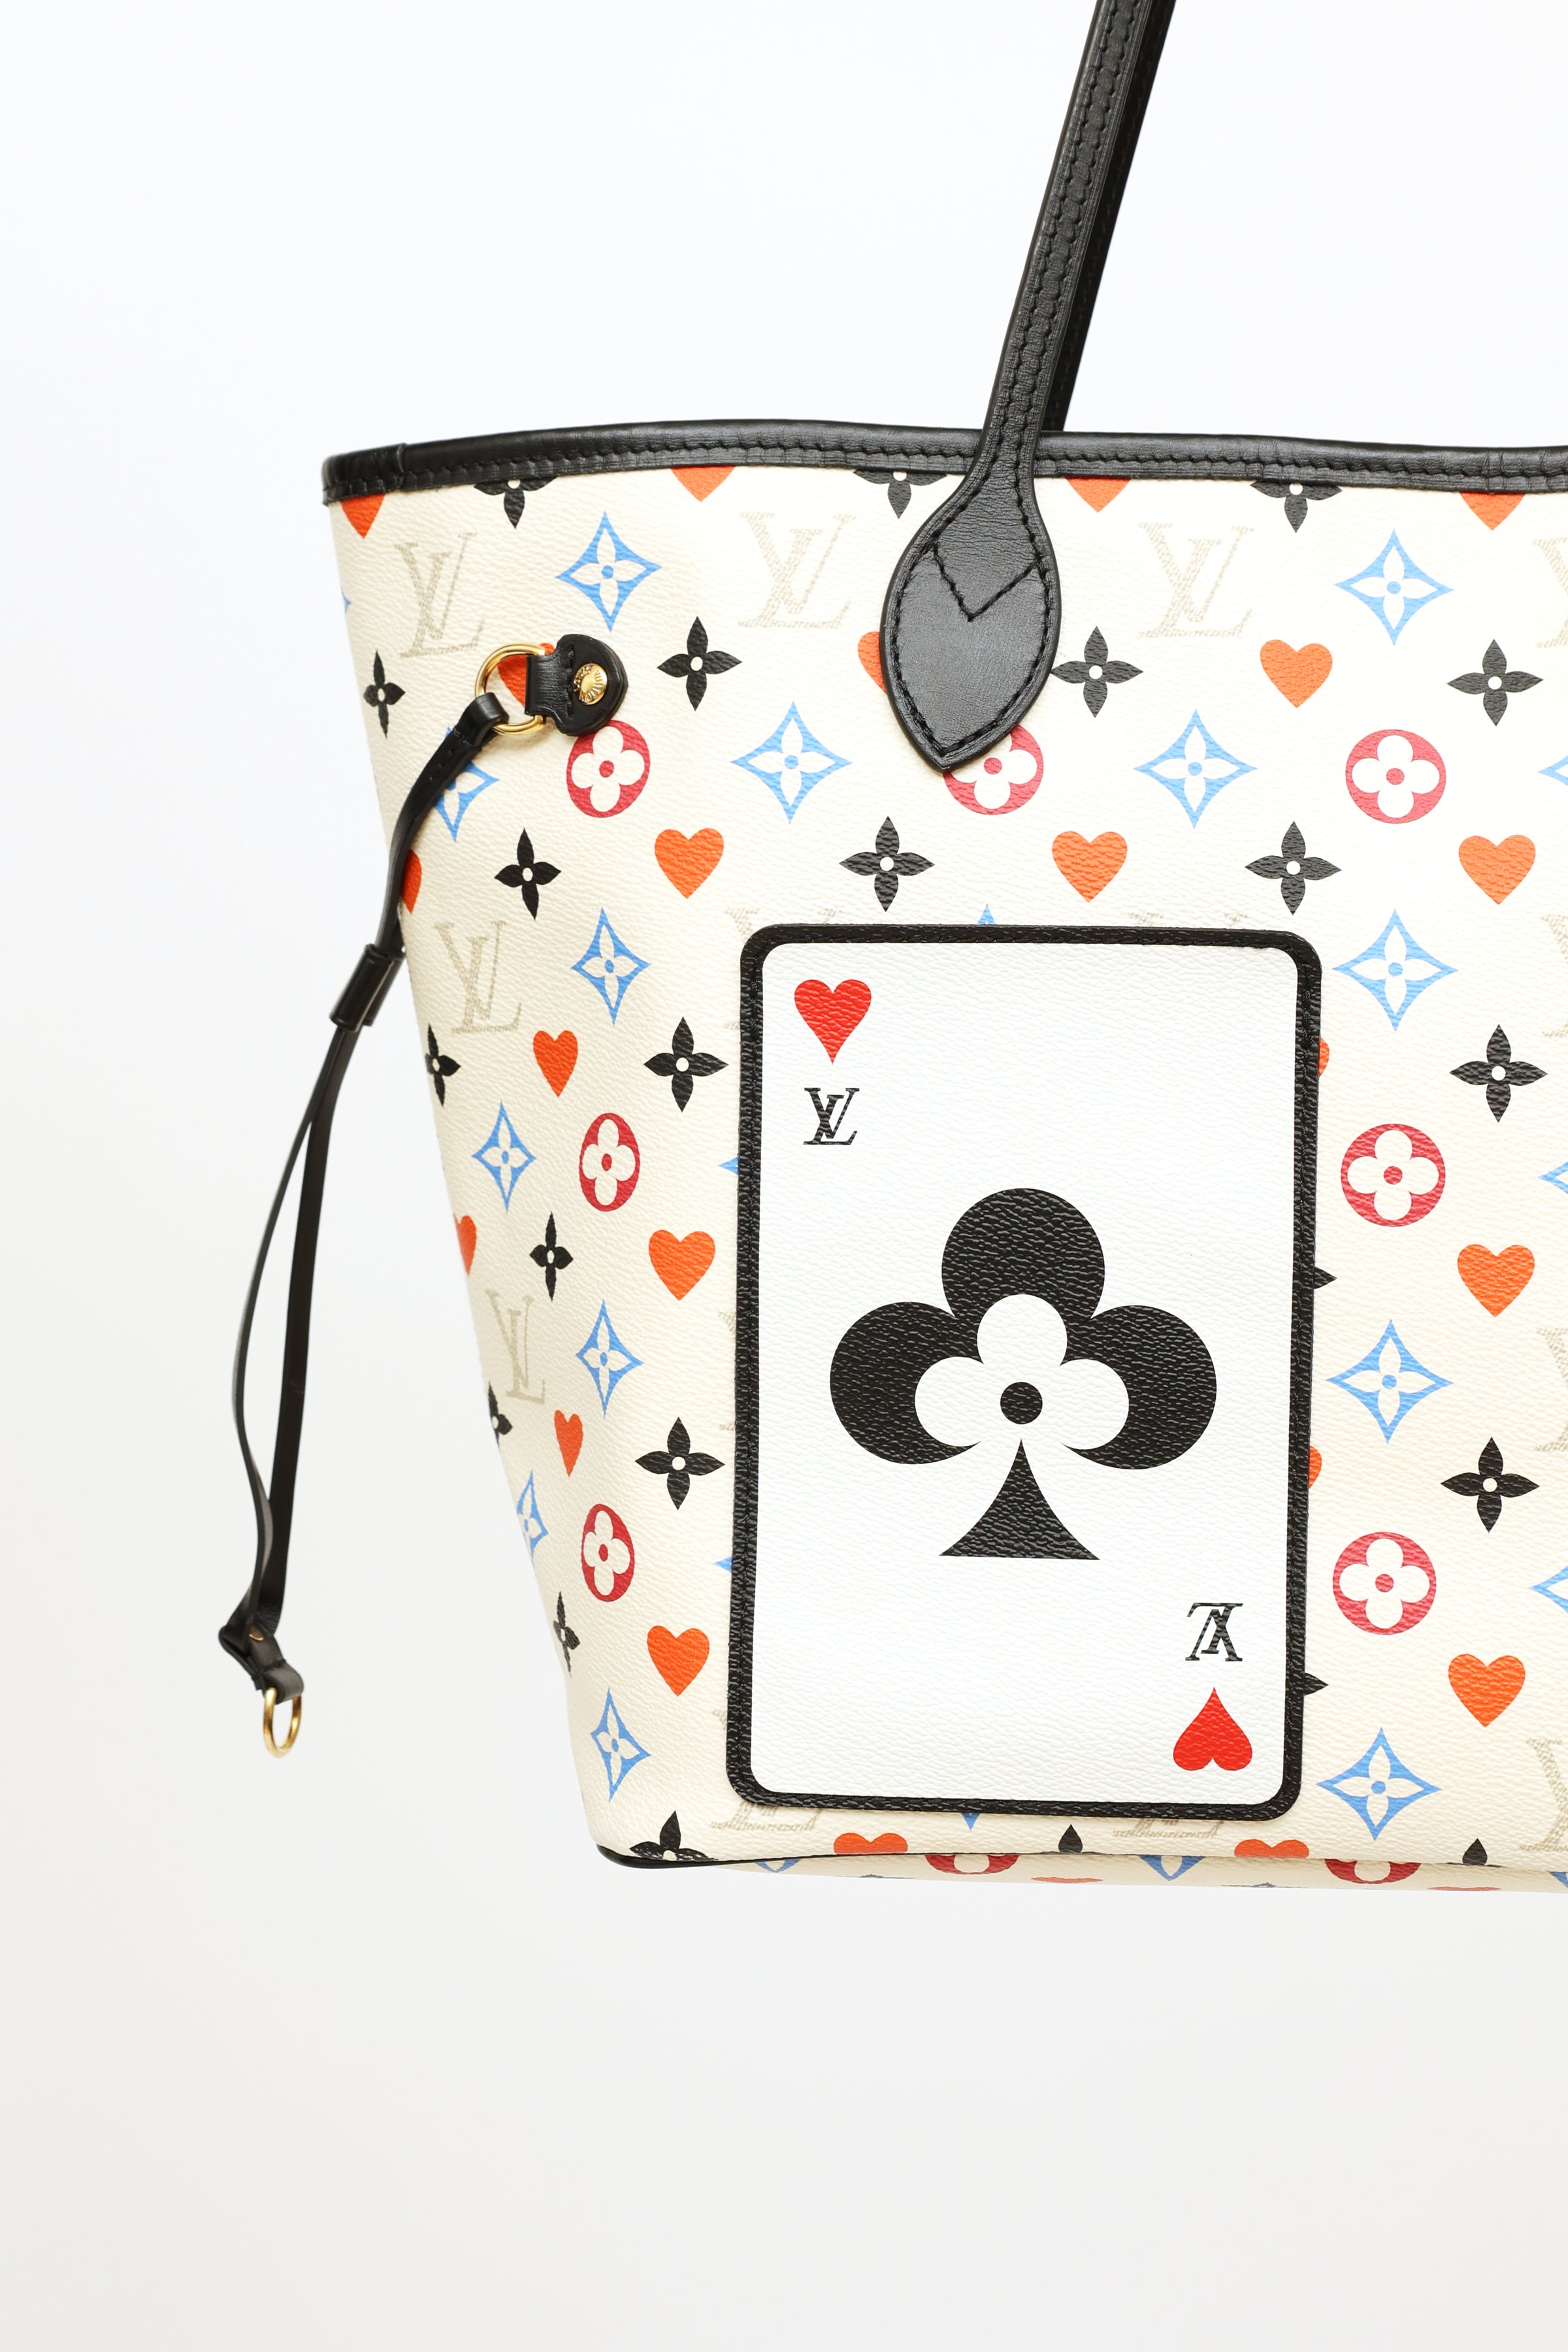 Louis Vuitton Monogram Game on Neverfull Tote Bag